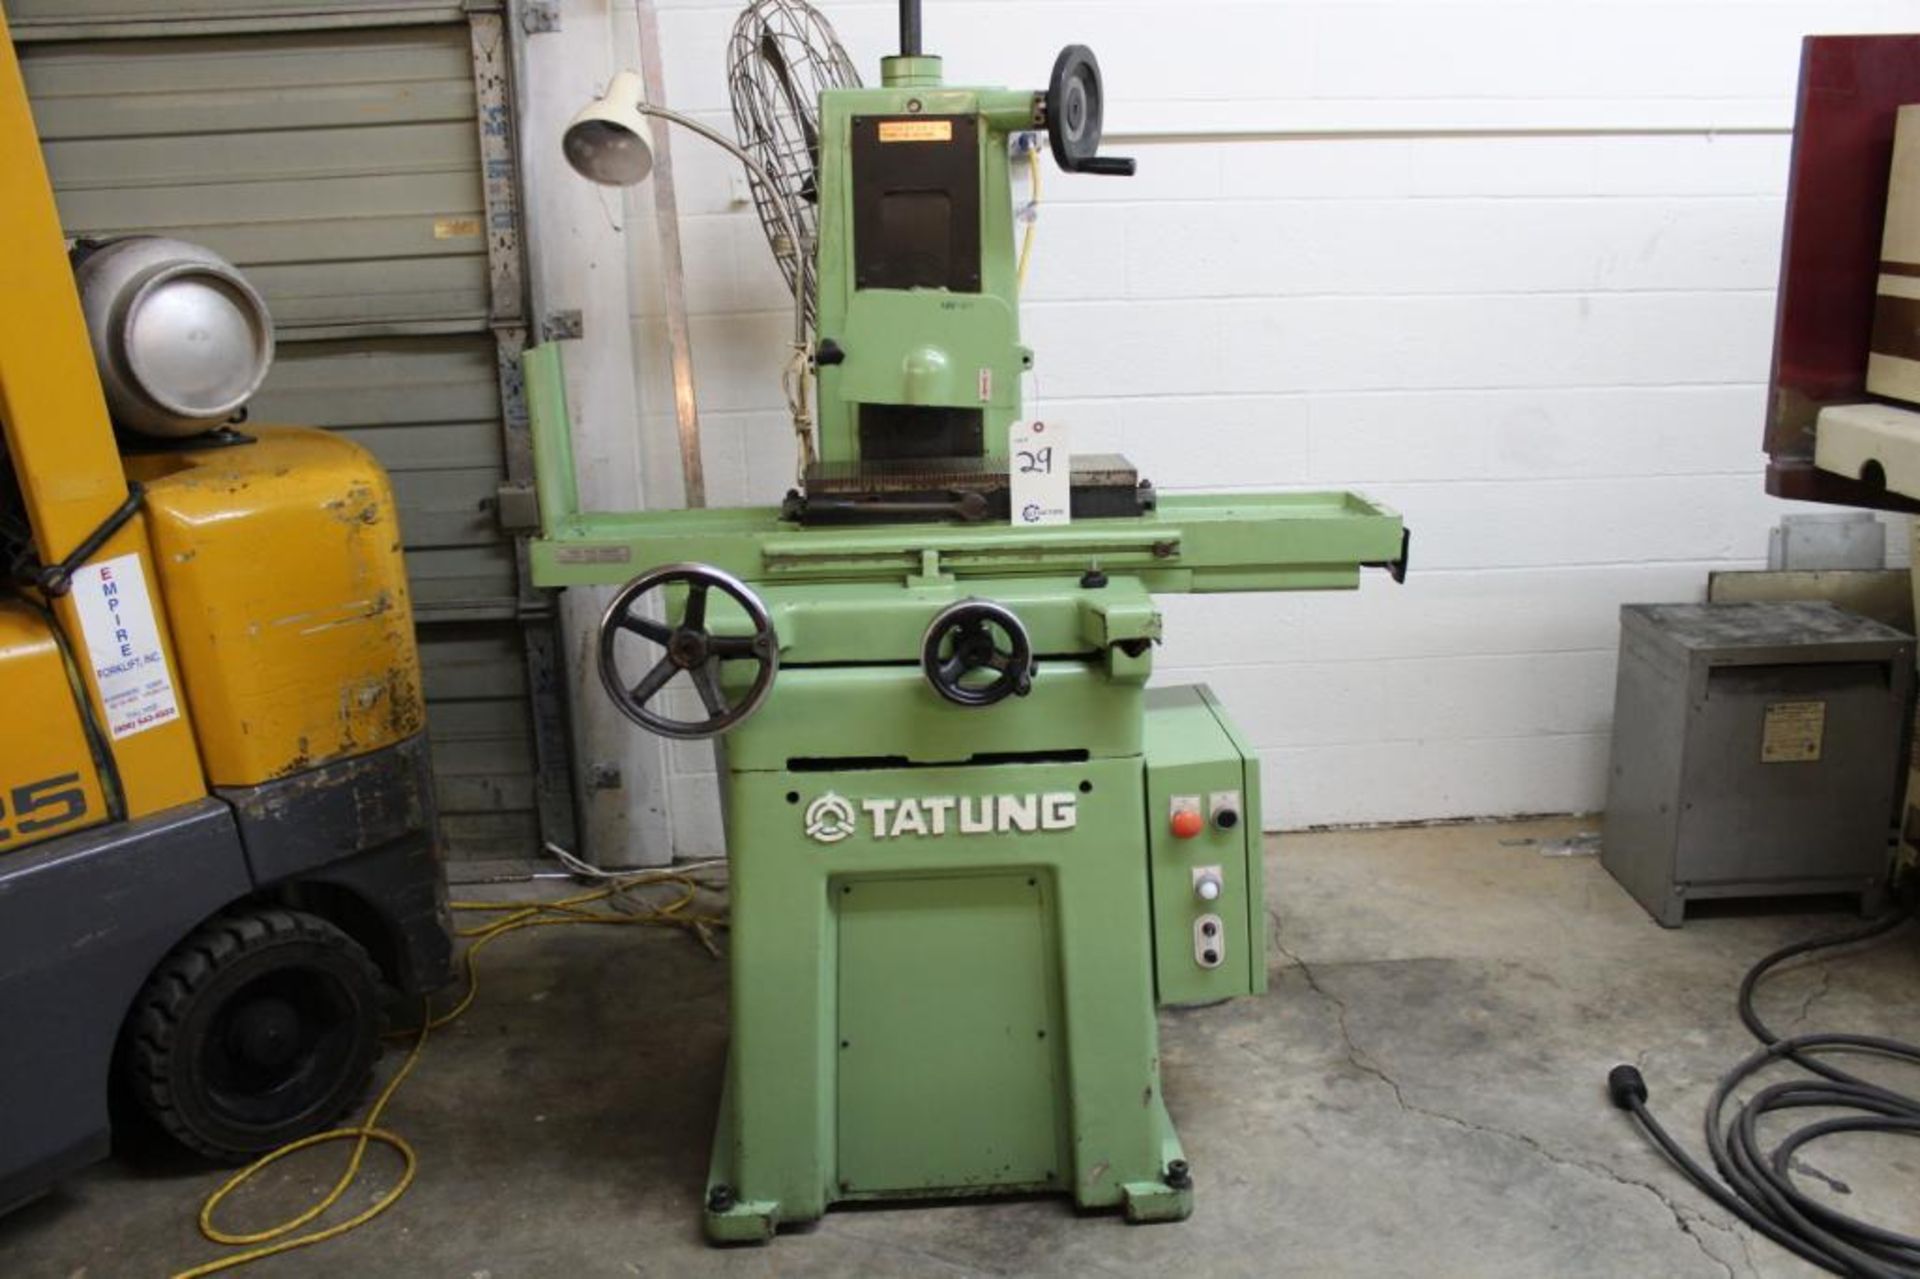 Tatung 6" x 18" hand feed surface grinder